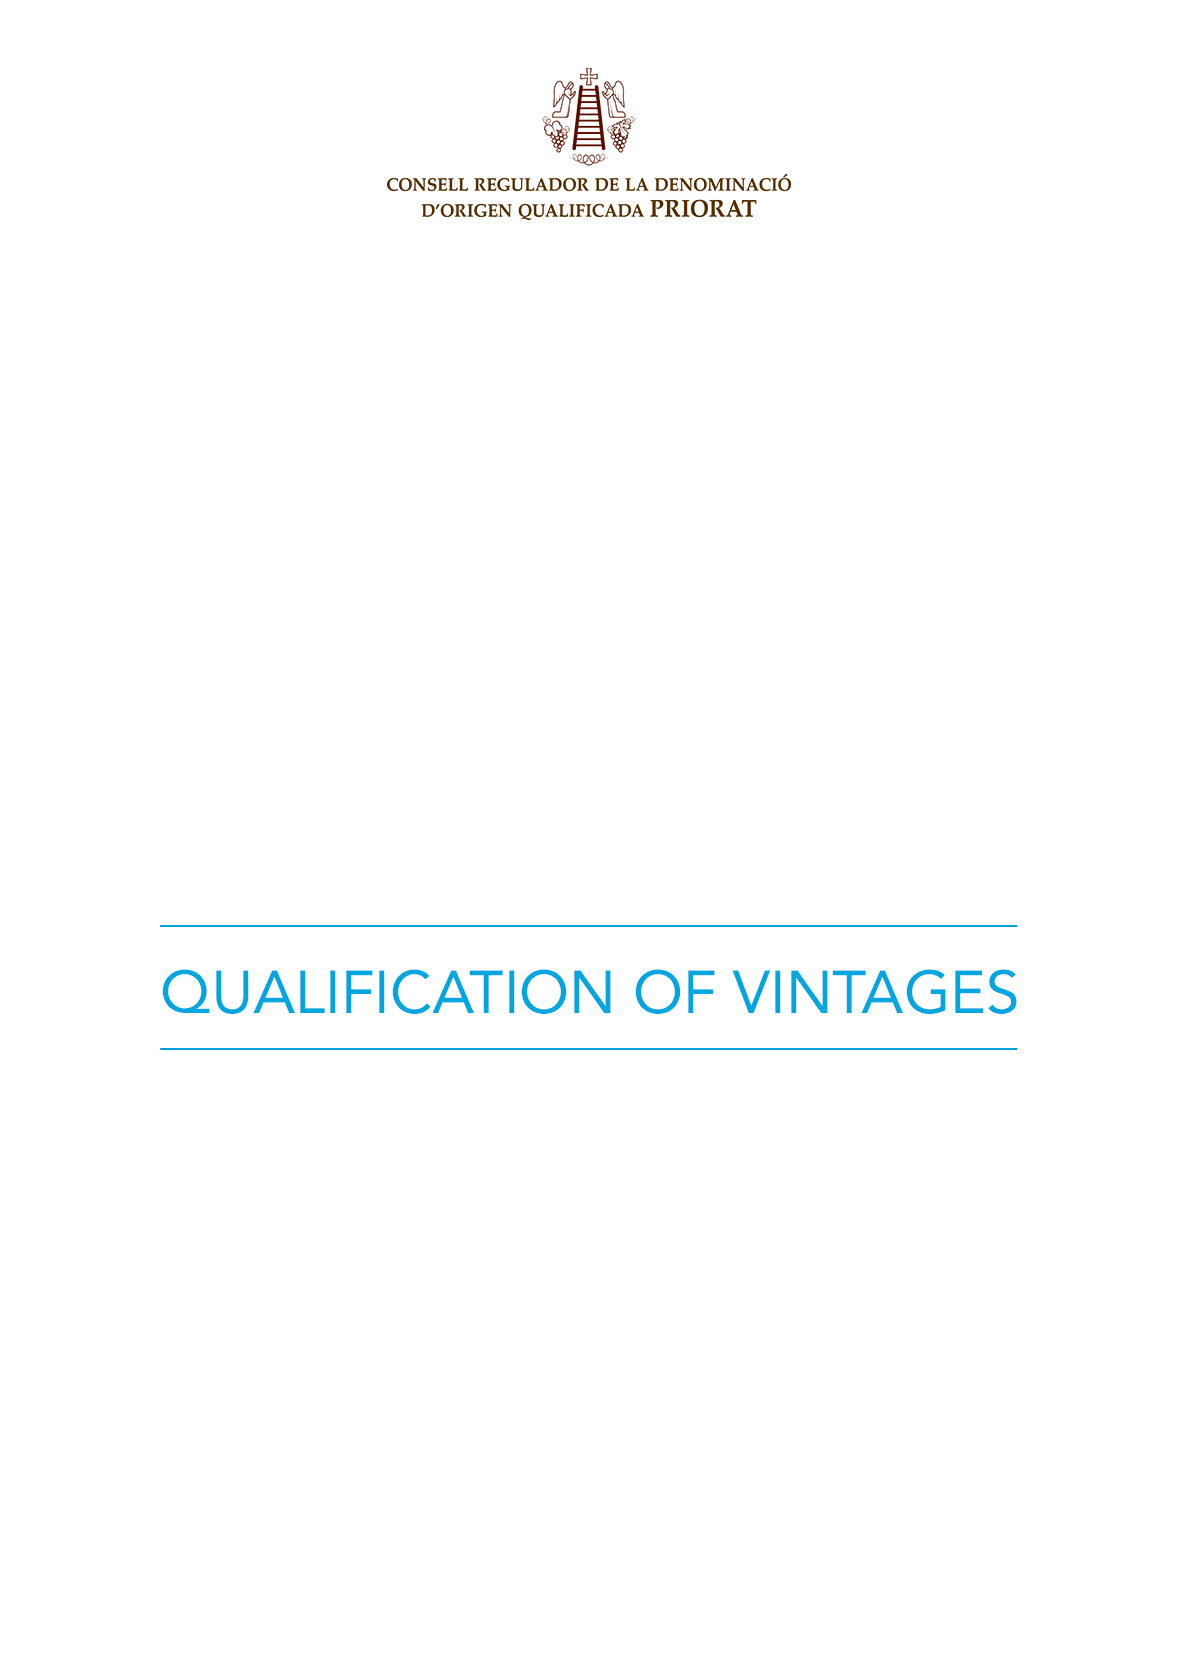 Qualification of vintages